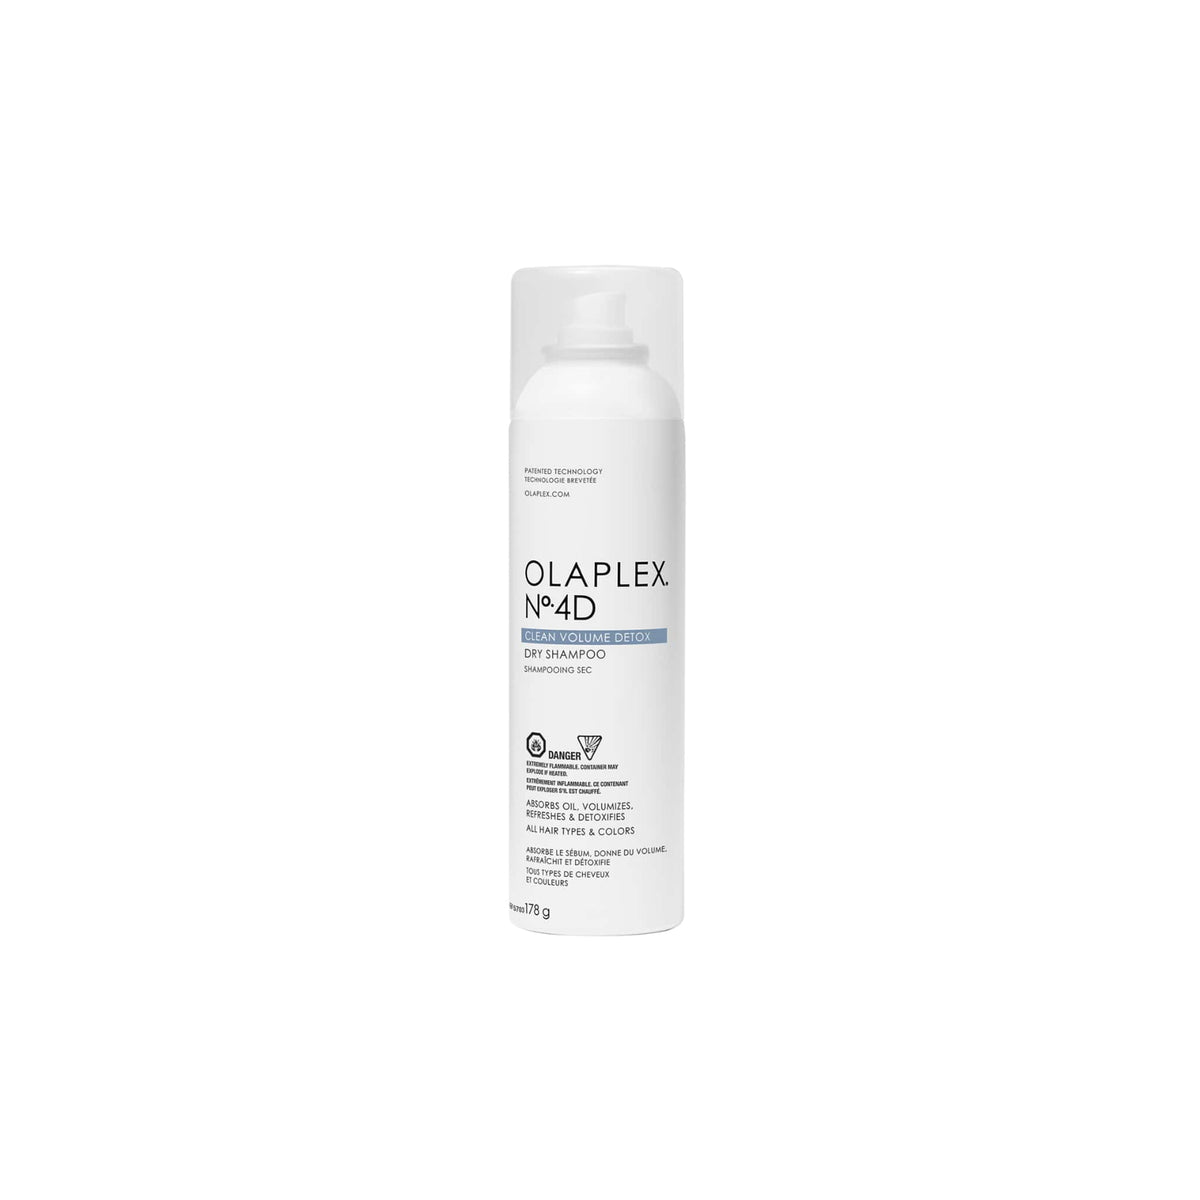 Olaplex No. 4D Clean Volume Detox Dry Shampoo | Retail Box